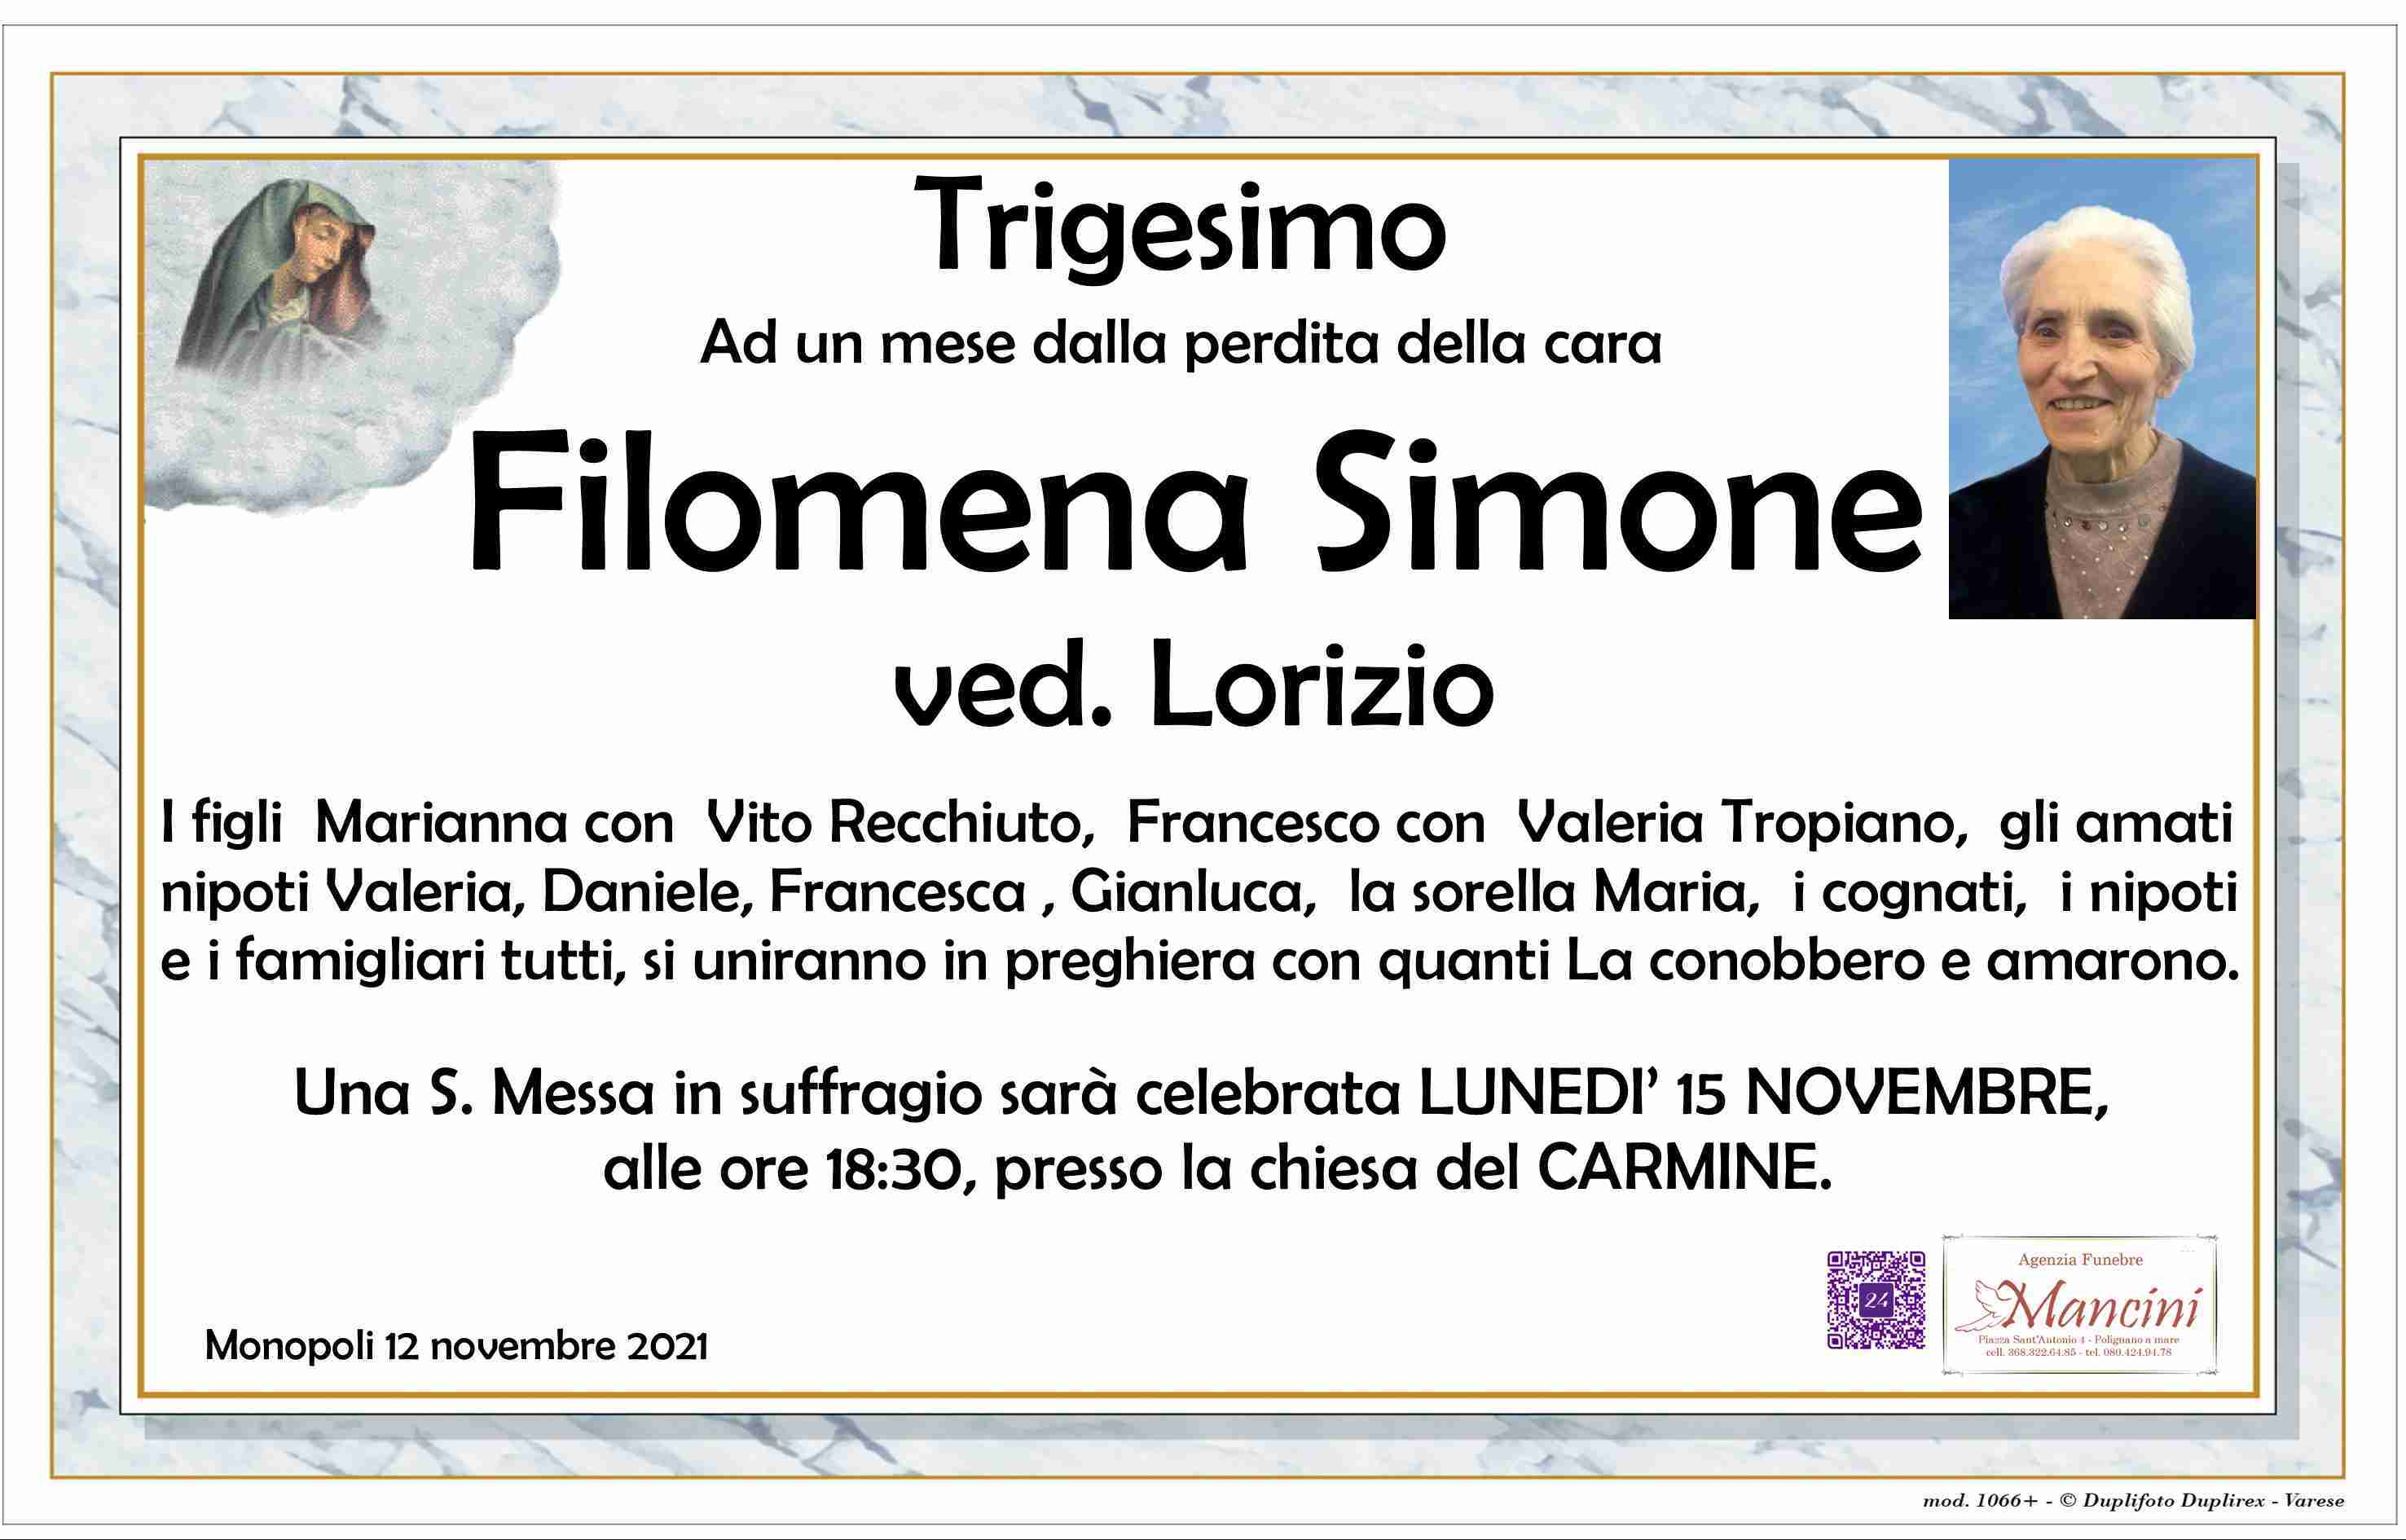 Filomena Simone